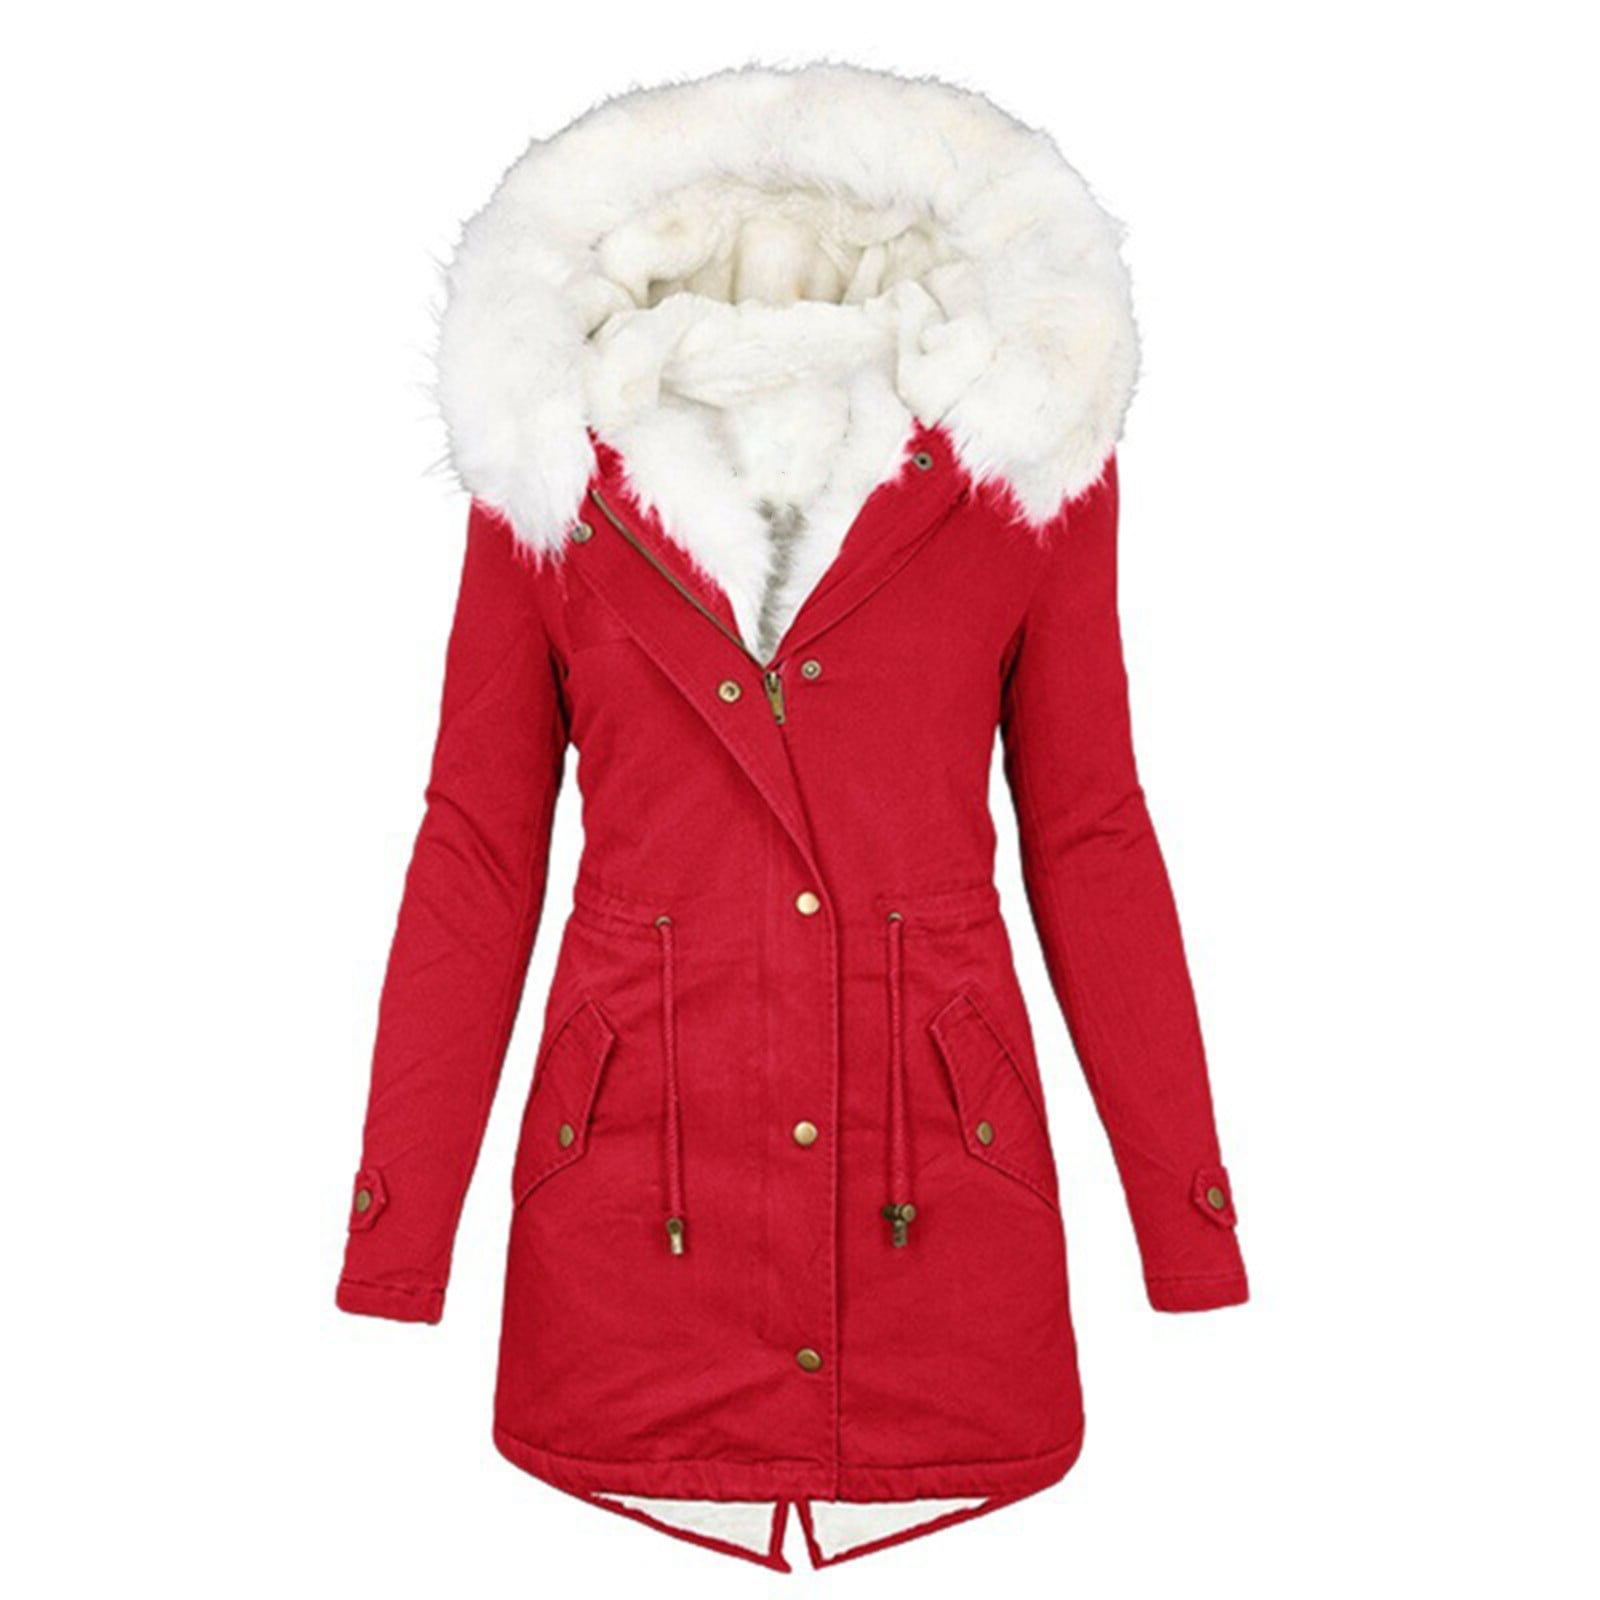 Hfyihgf Womens Winter Coats Casual Warm Thick Jacket Big Faux Fur